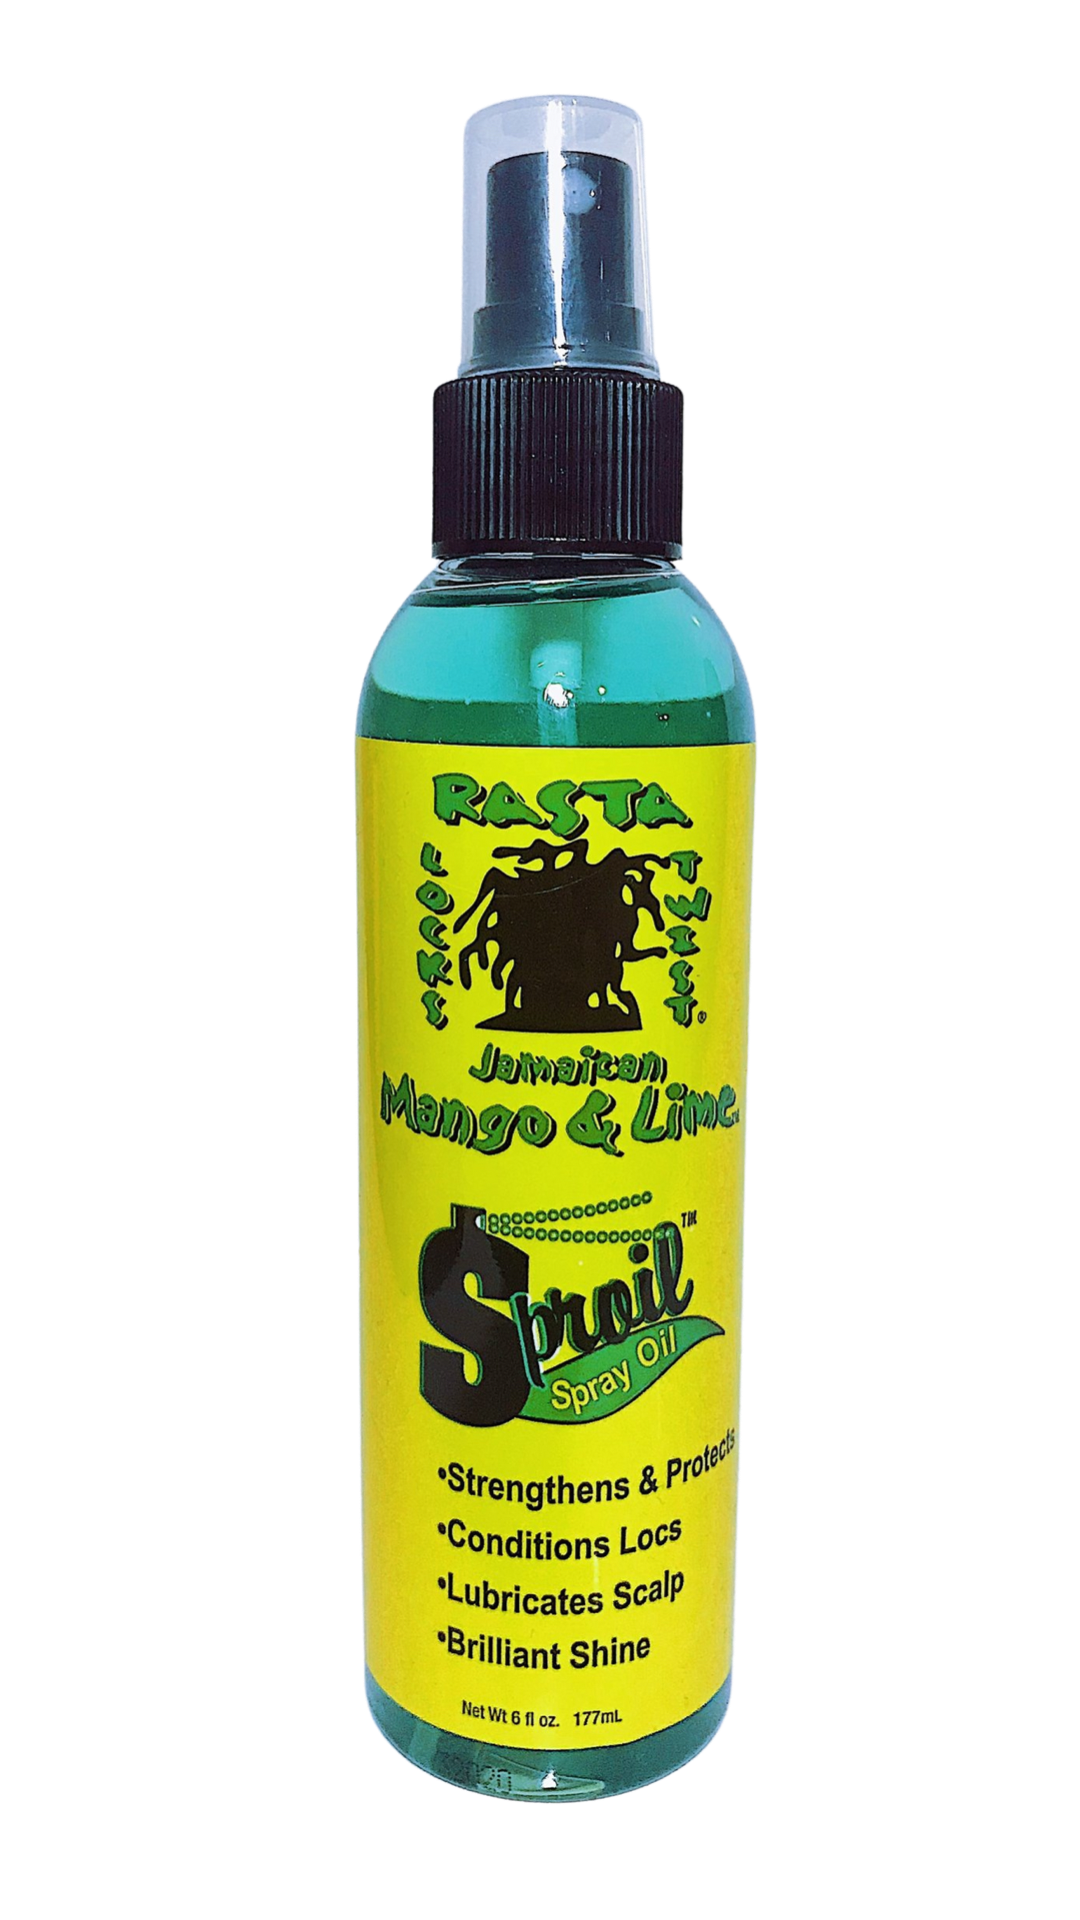 Jamaican-Mango-&-Lime-Locks-Twist-Sproil-Spray-Oil.jpg